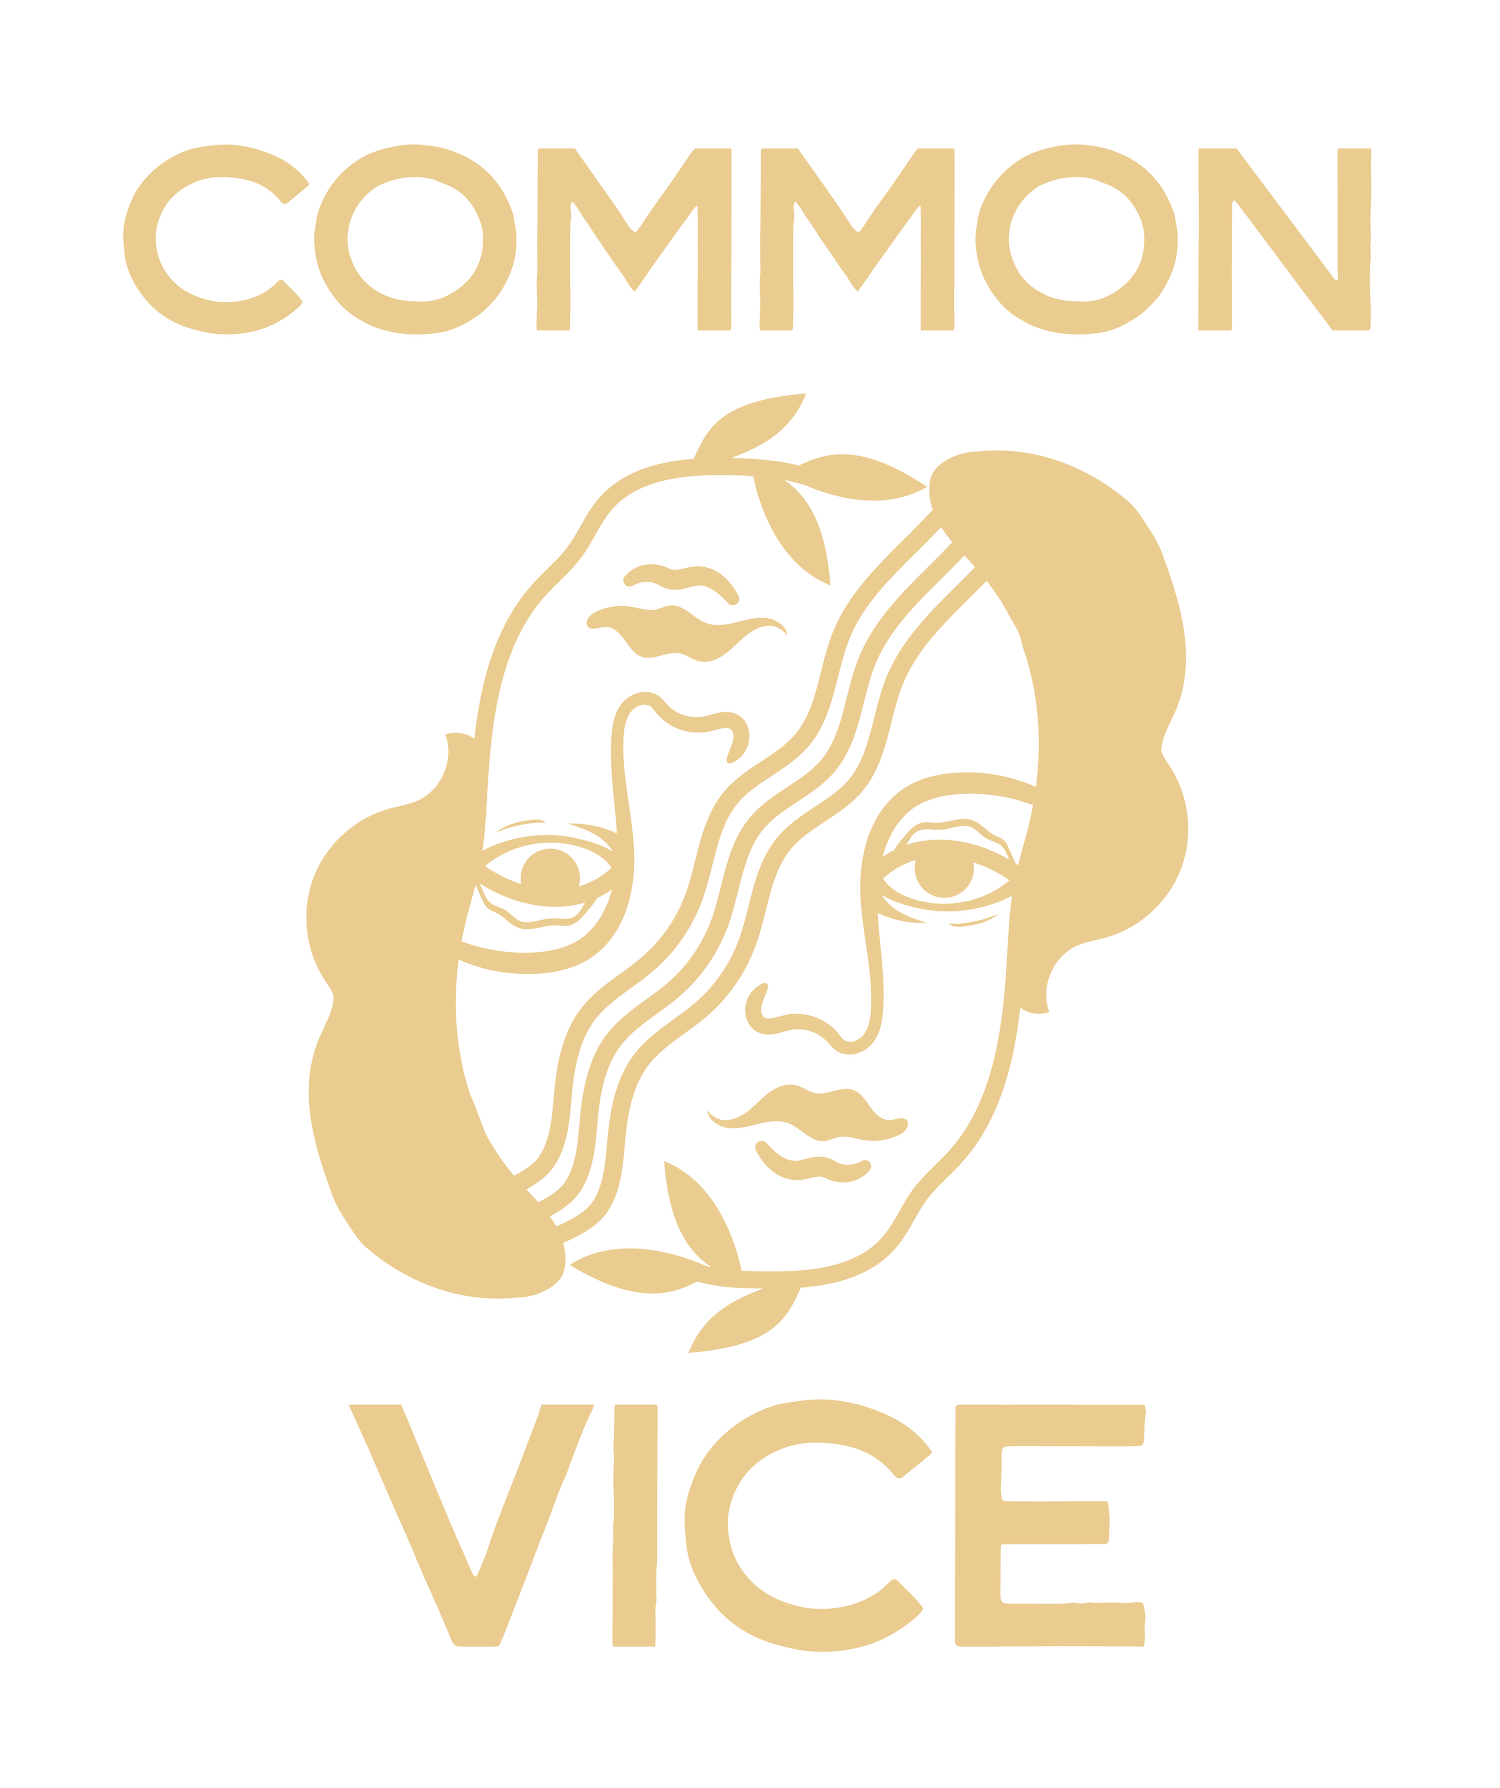 Common Vice